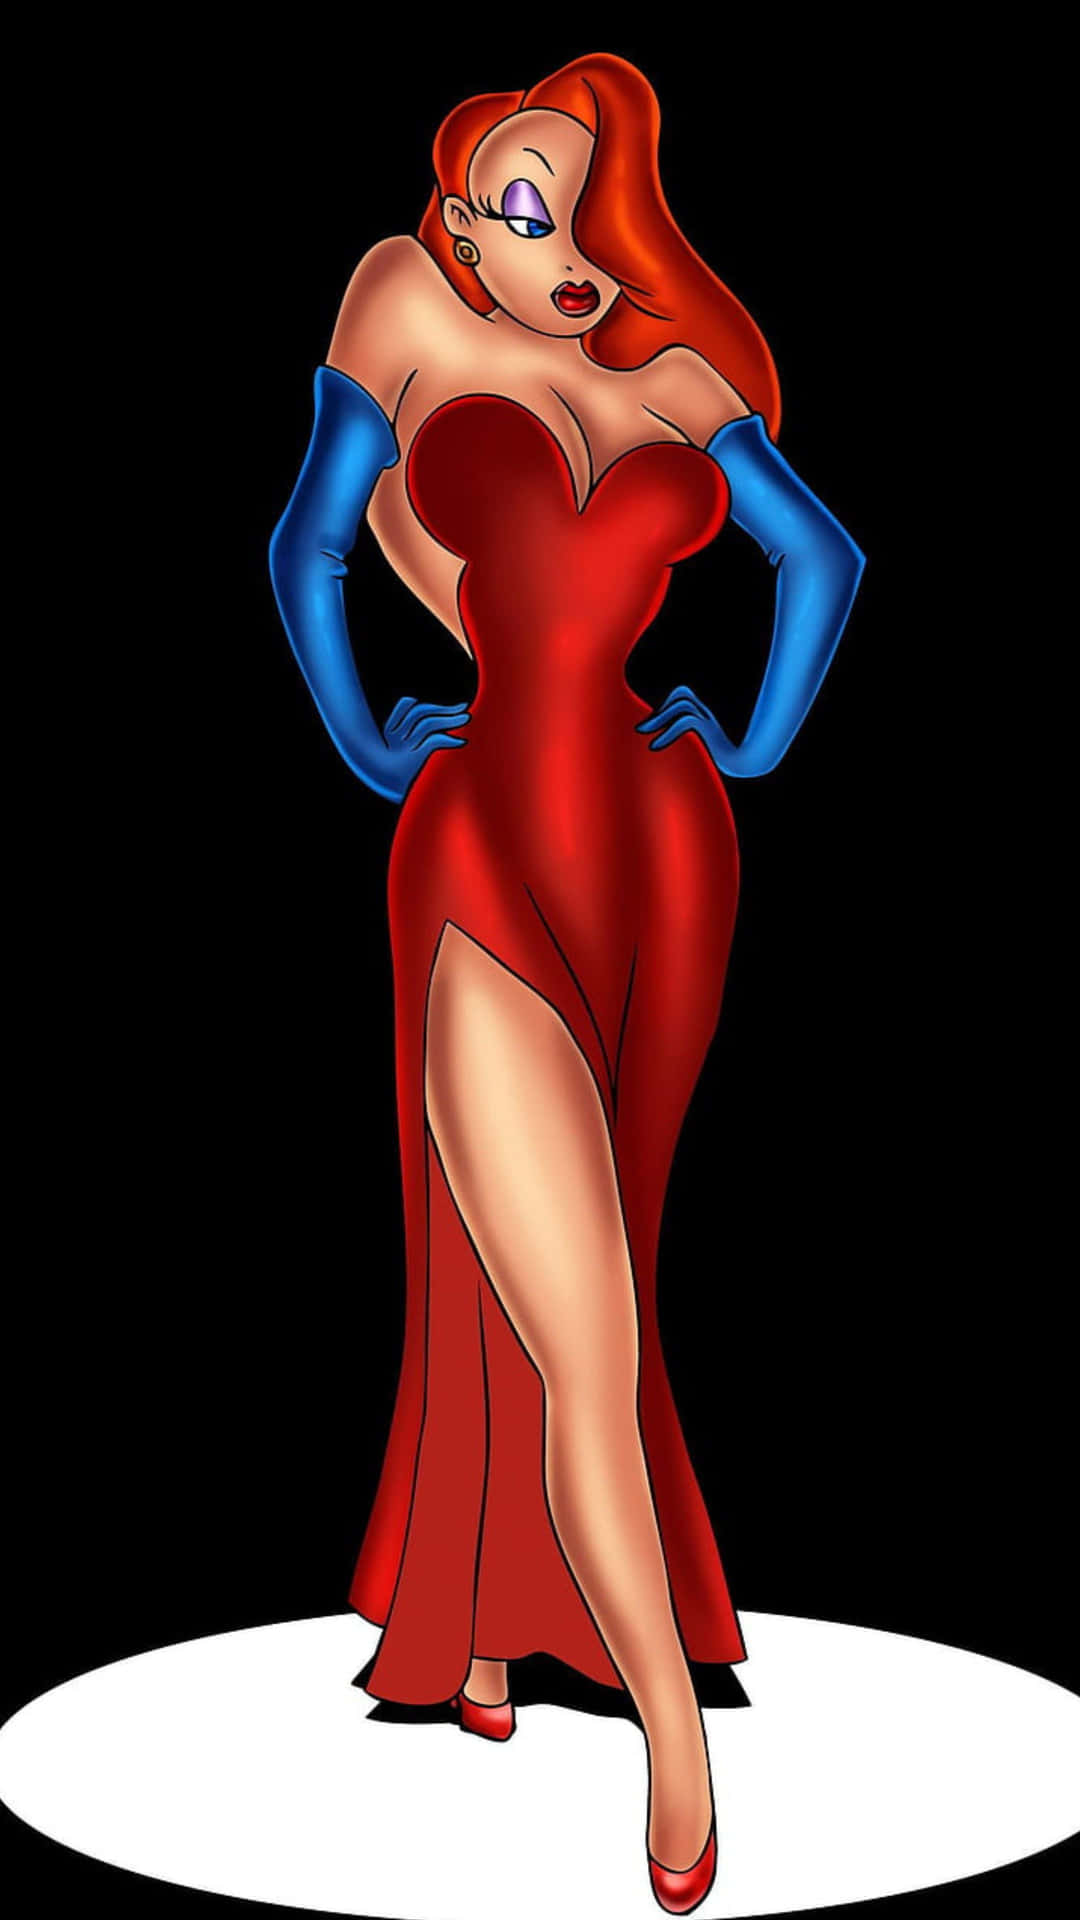 Jessica Rabbit Iconic Red Dress Background